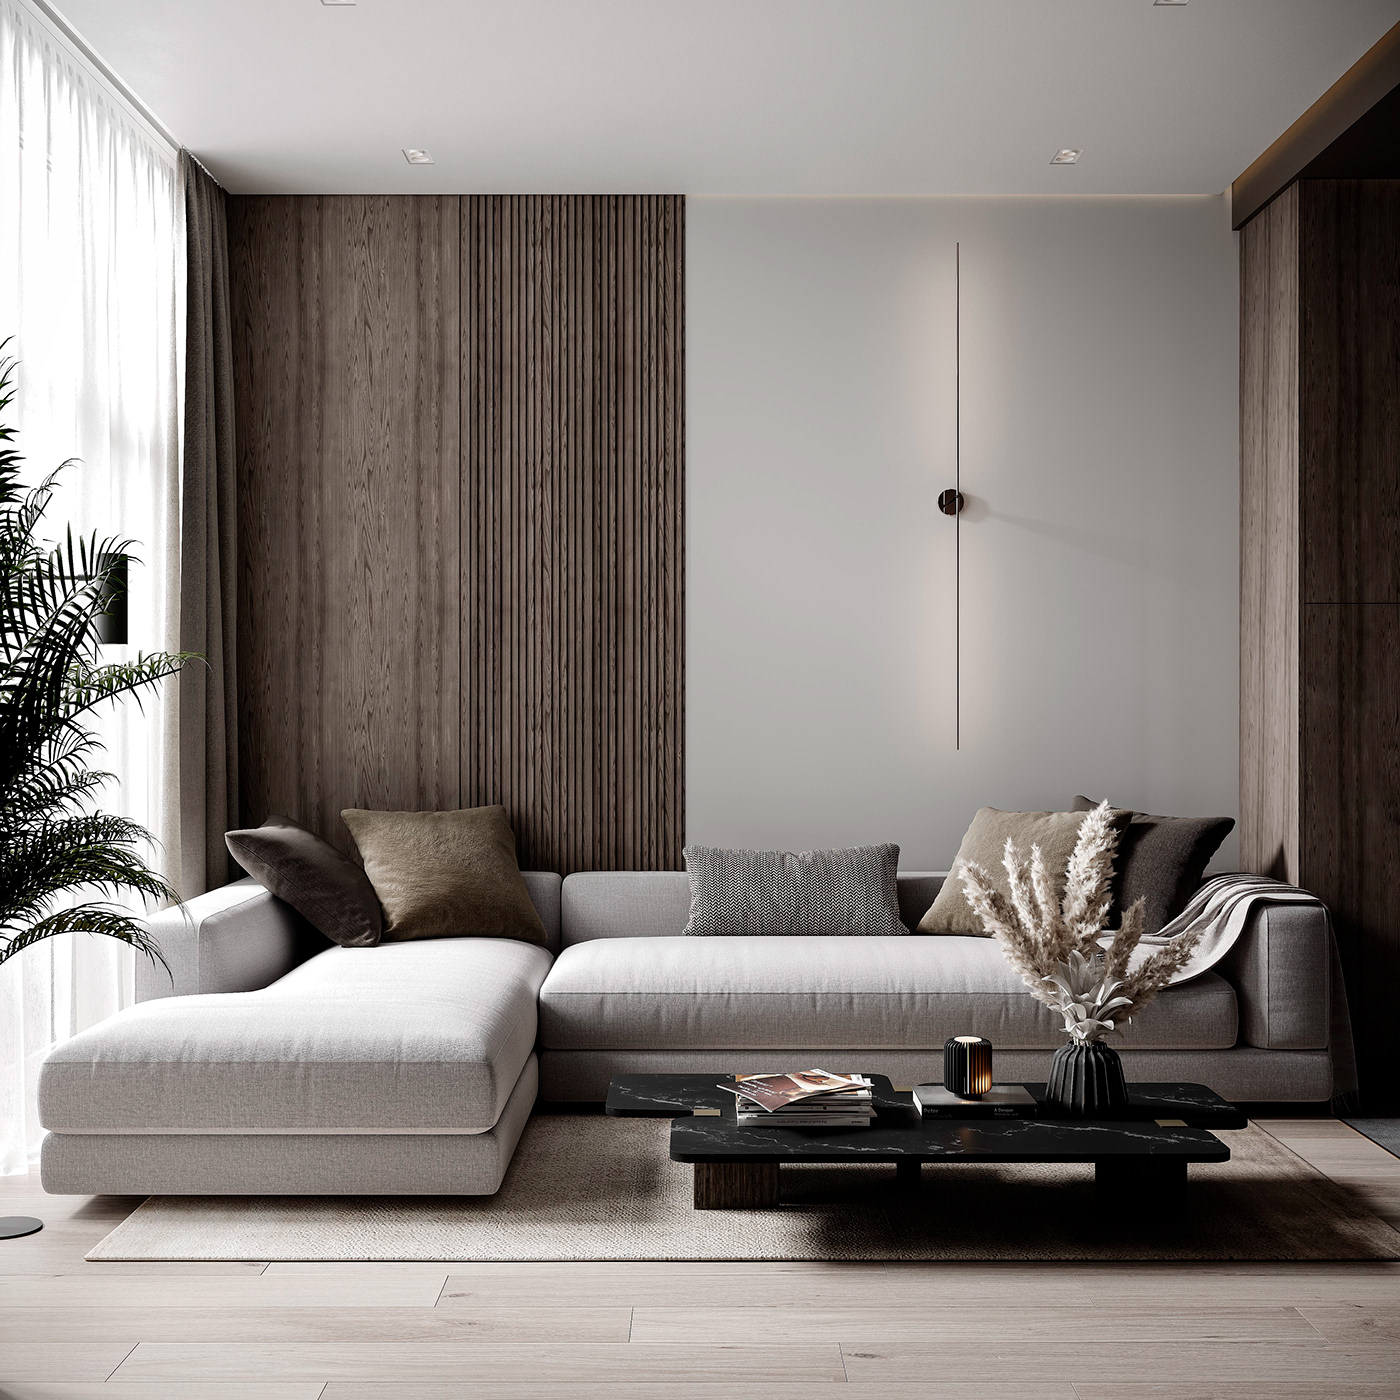 3ds max corona render  design interior design  Modern Design modern interior